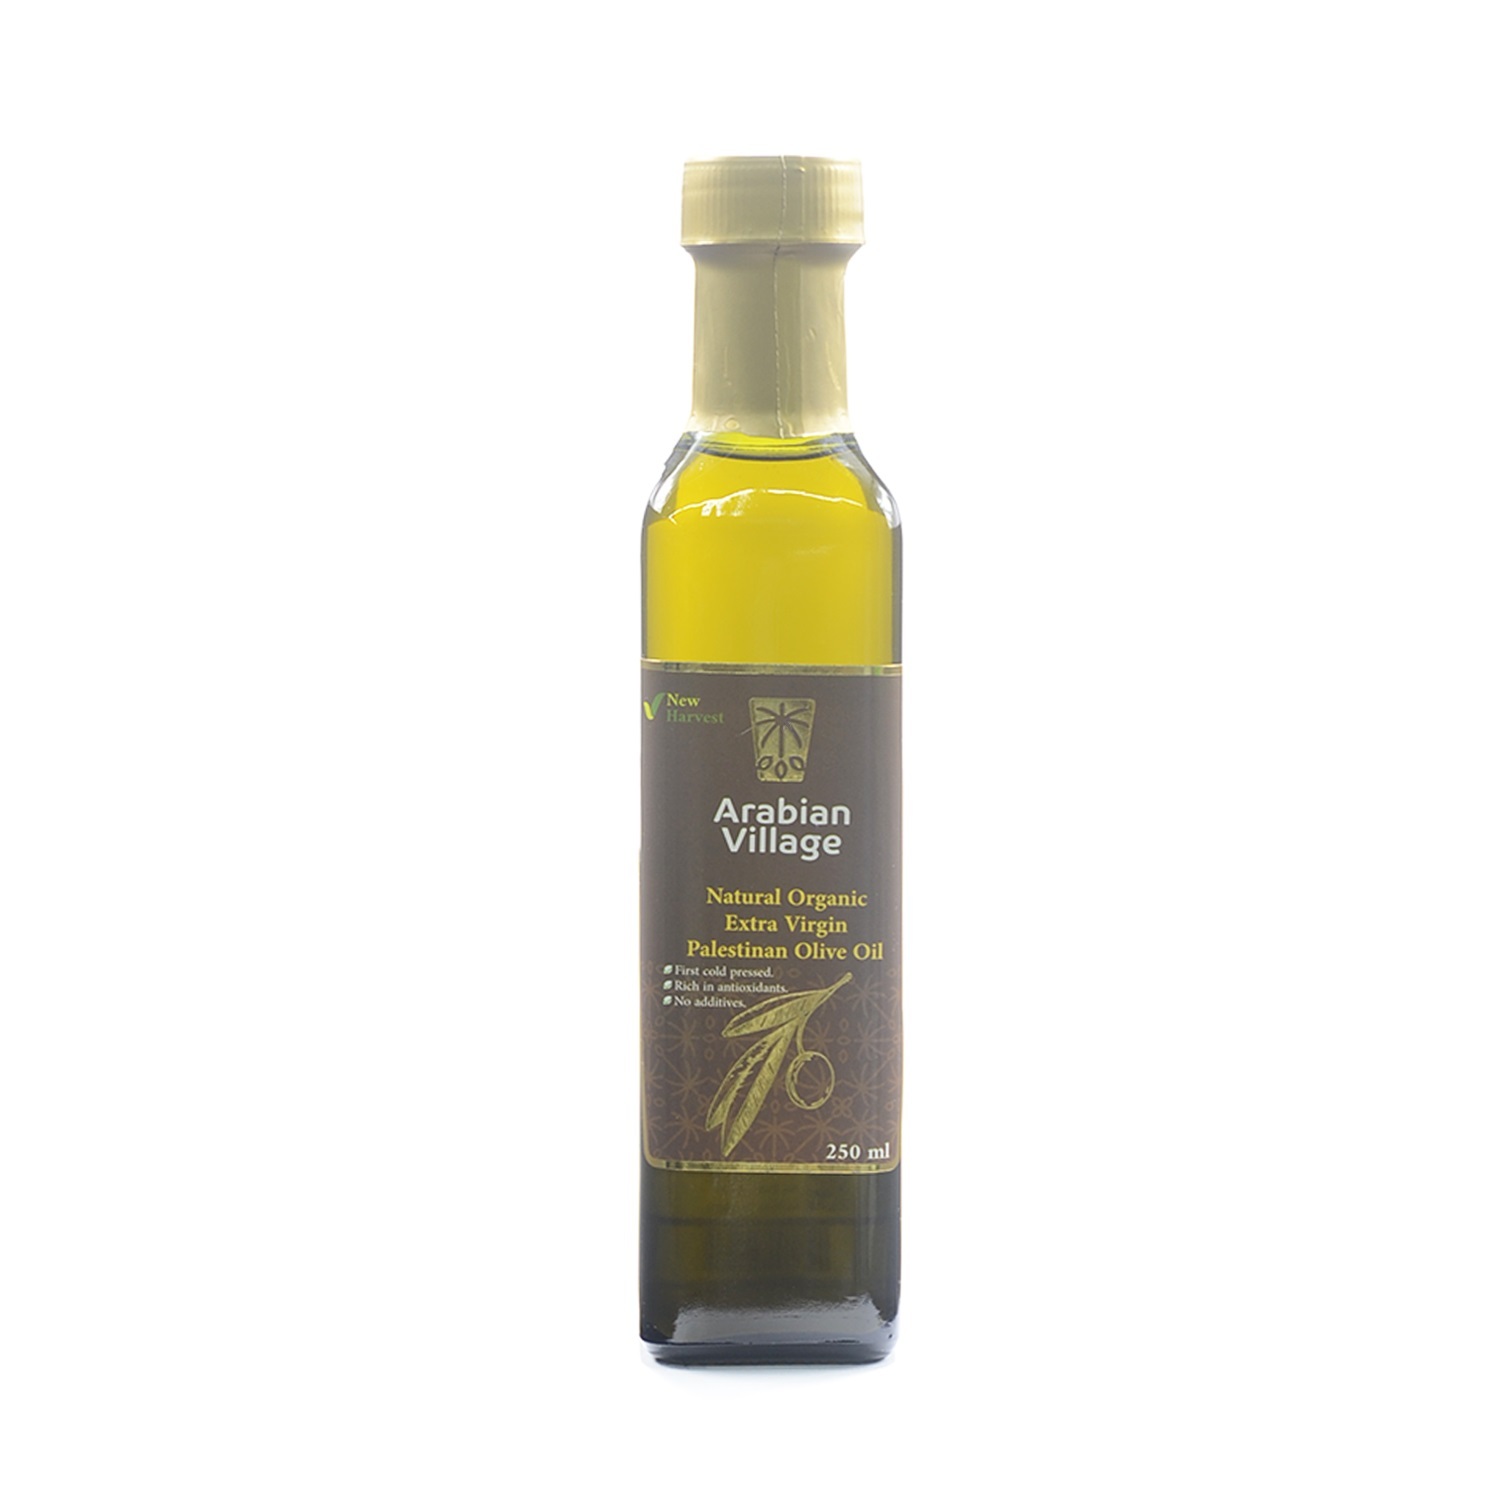 Natural-organic-extra-virgin-palestinian-olive-oil-250ml